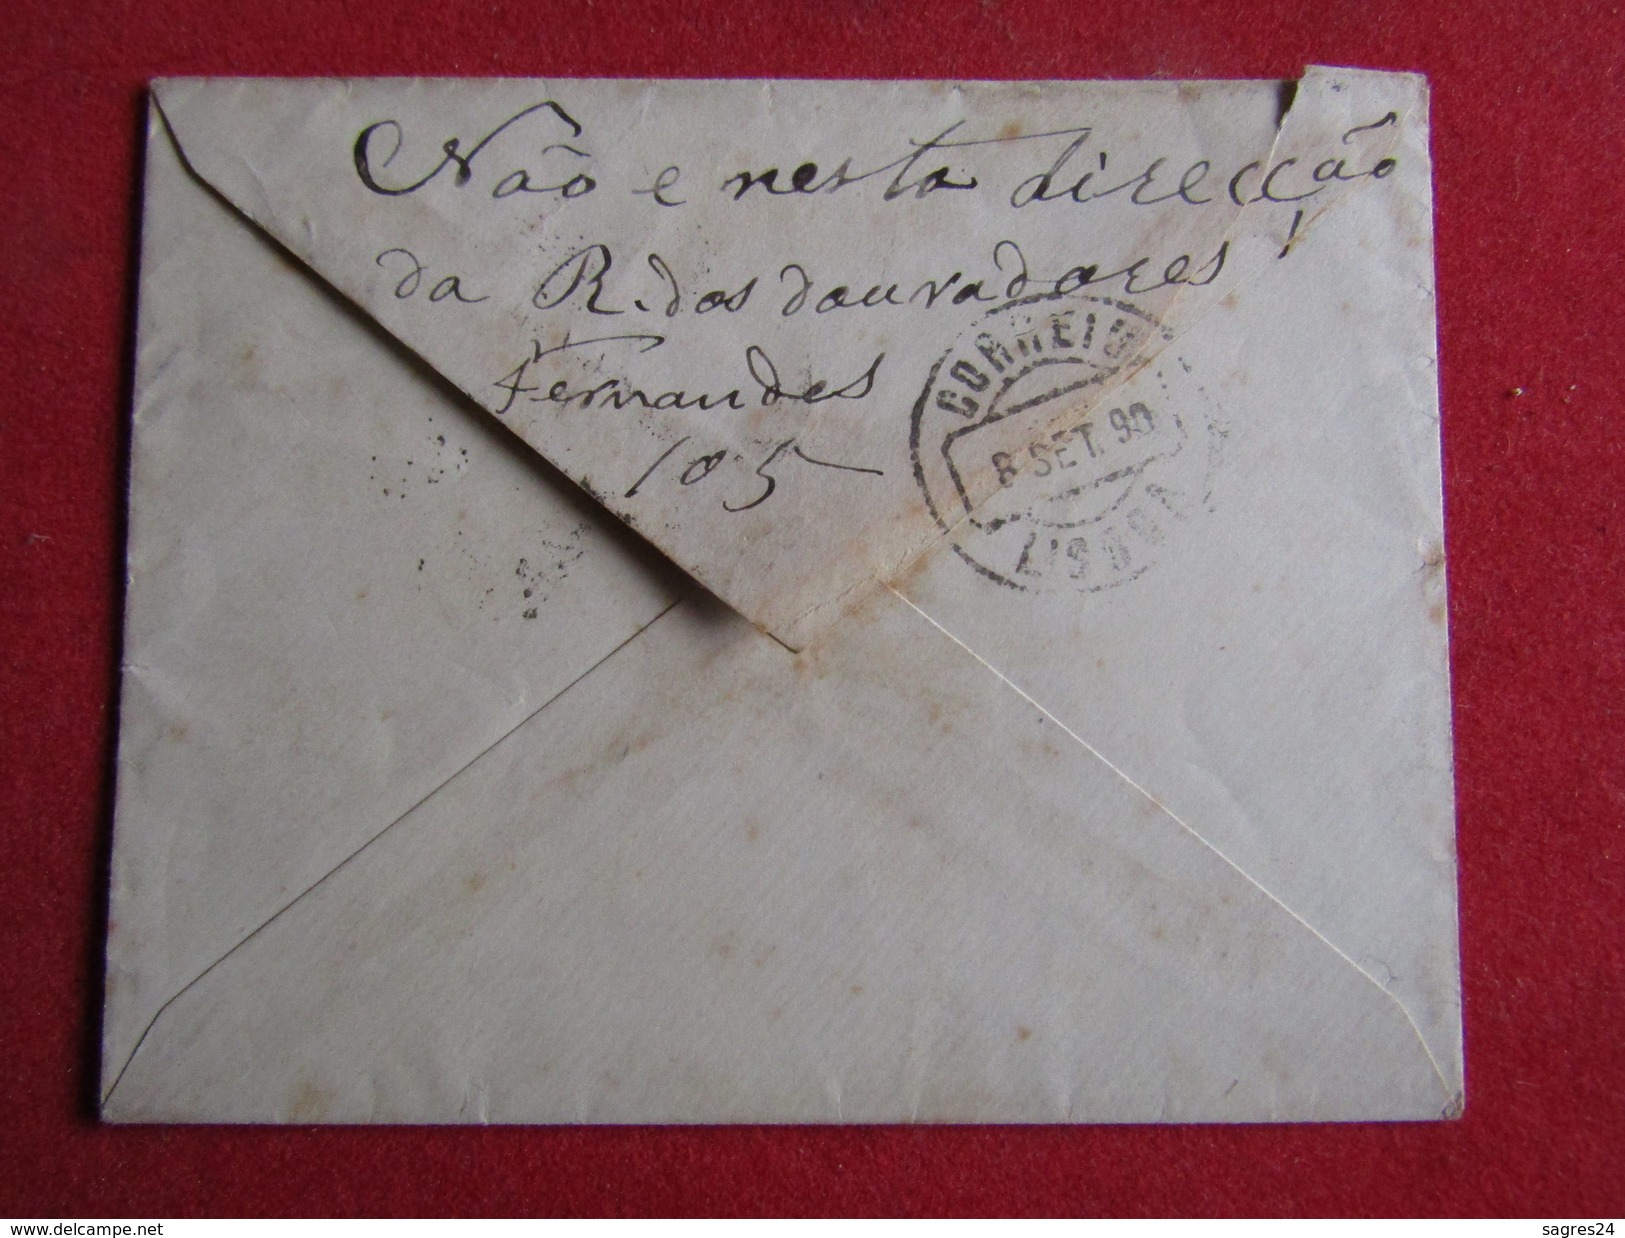 Portugal - D.Luiz I - 25 Reis Sobre Carta Carimbo De Borba 1890 - Sur Lettre - Afinsa 63 - Briefe U. Dokumente